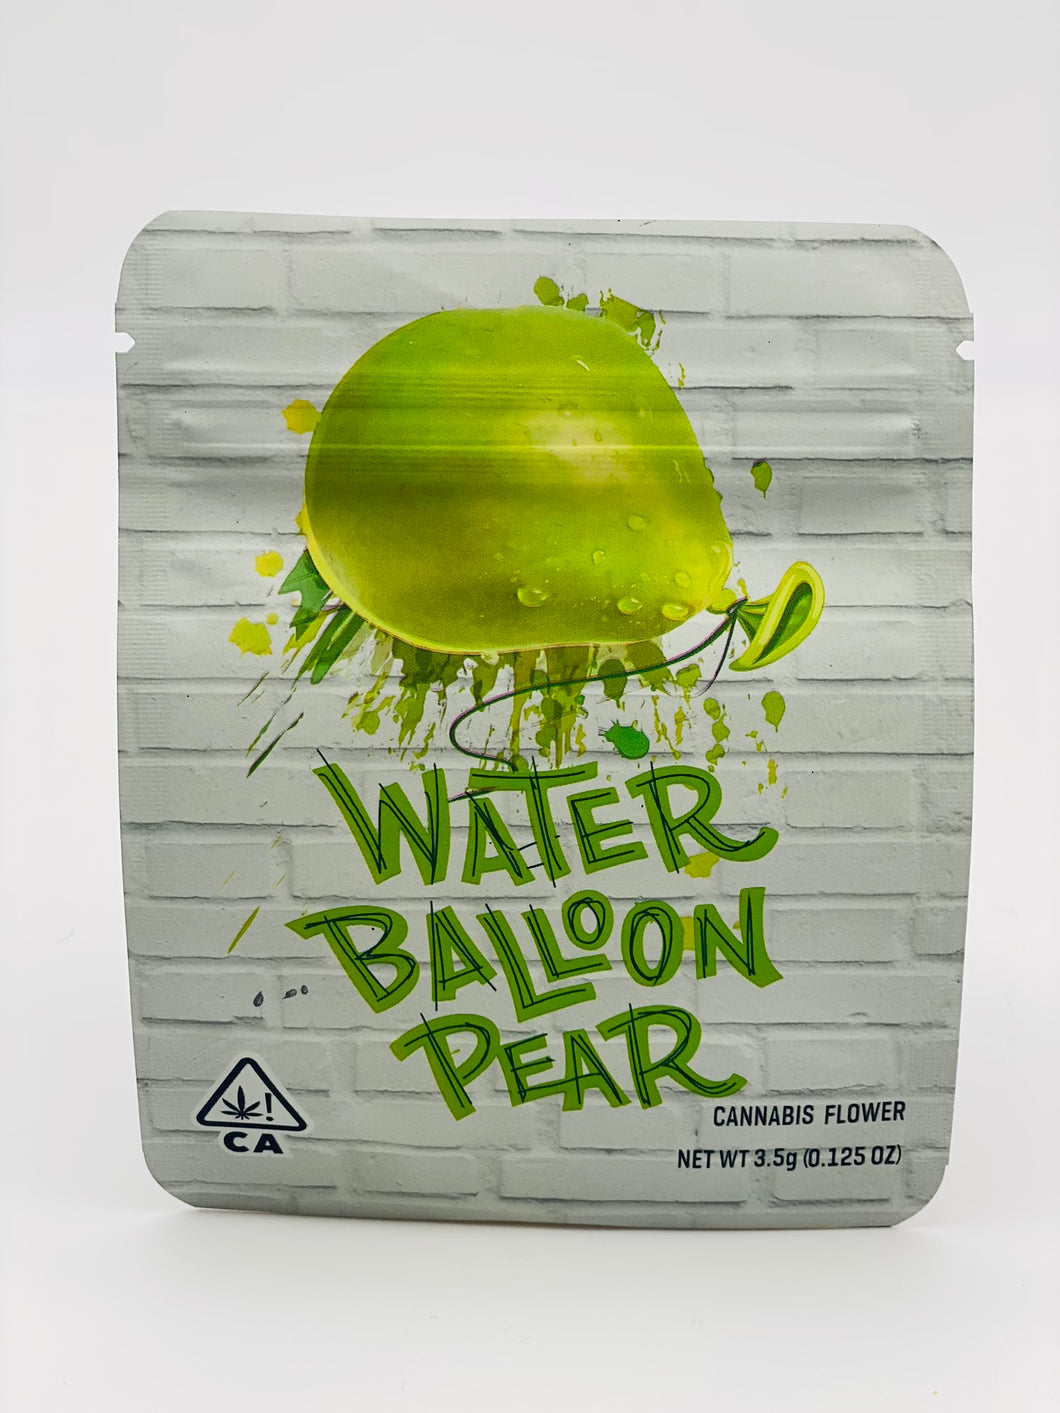 50 Water Balloon Pear 3.5-gram empty Mylar bags